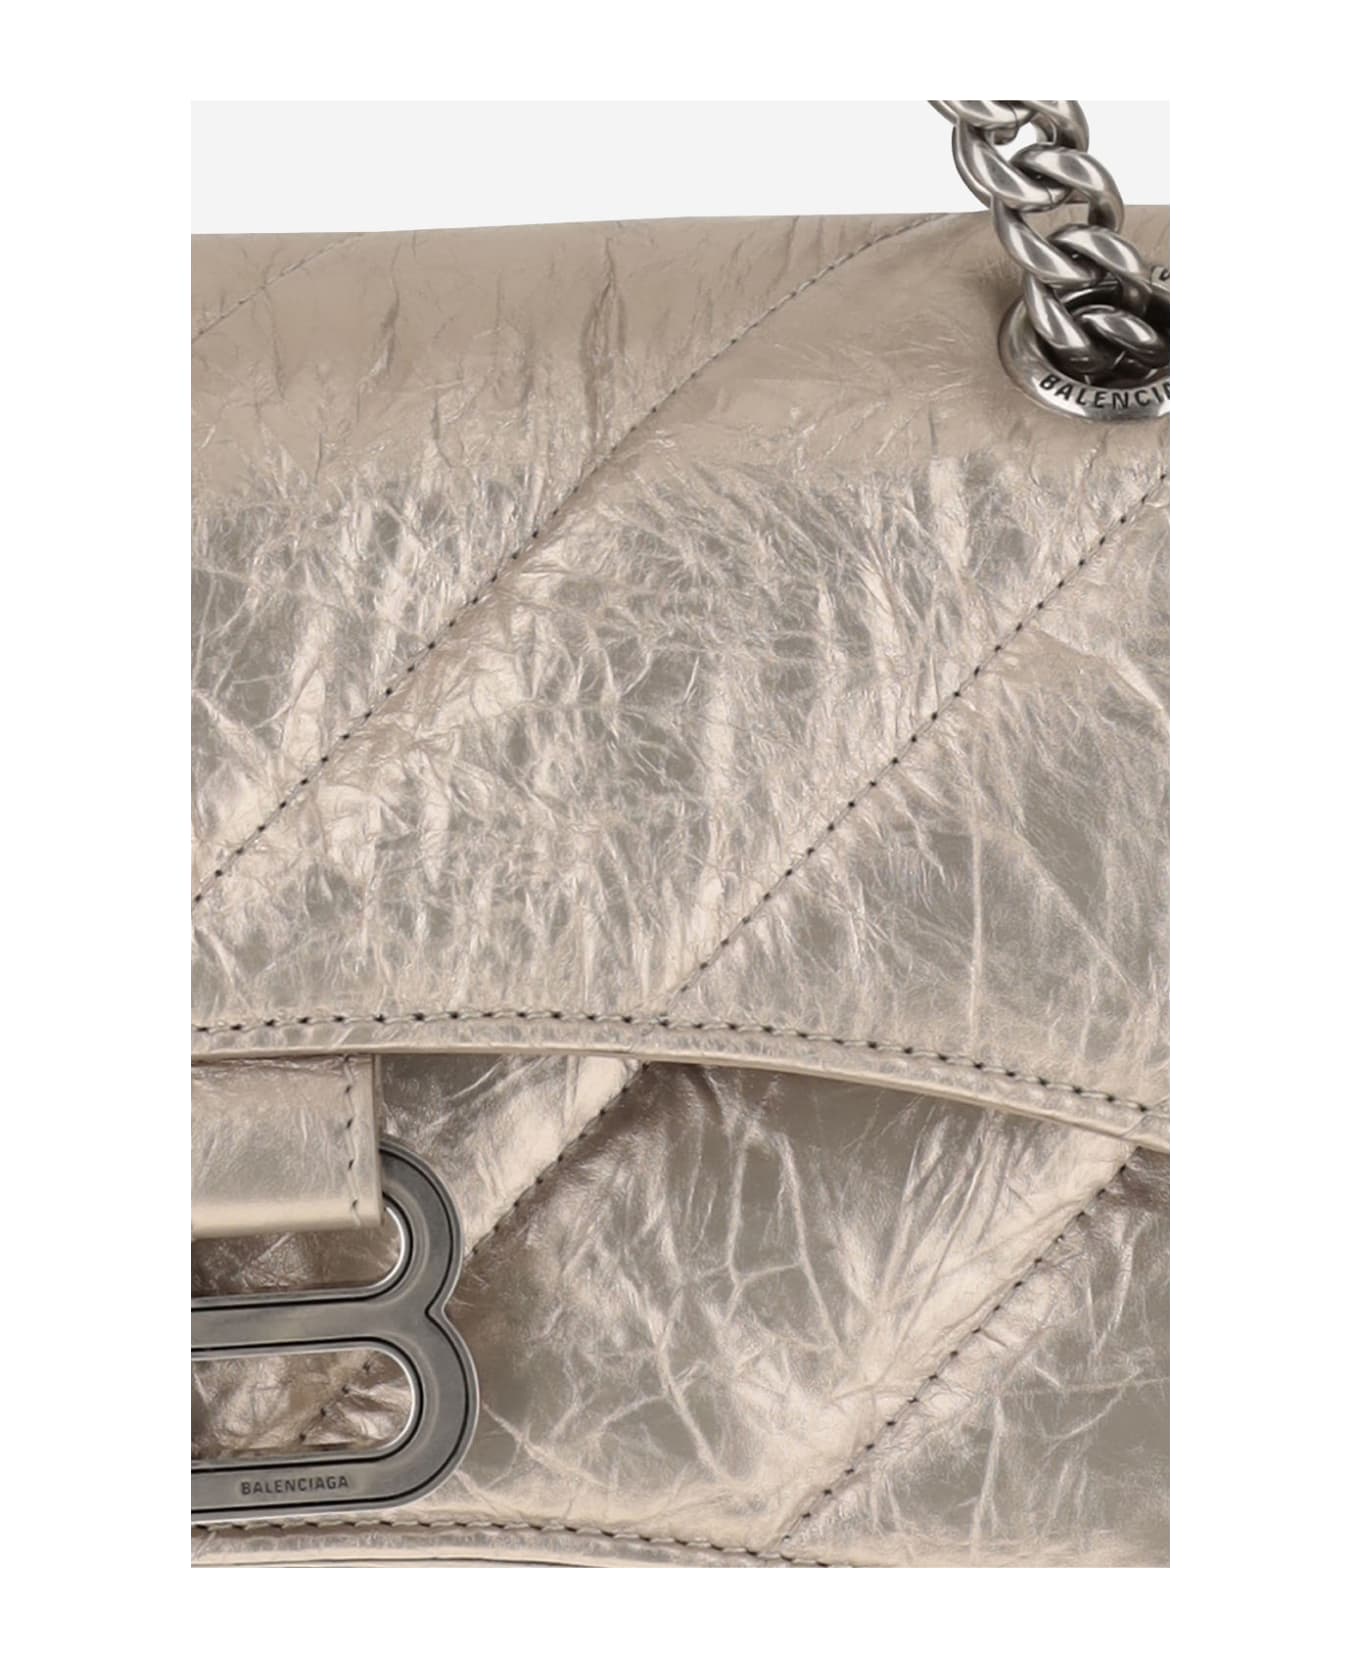 Balenciaga Small Quilted Crush Chain Bag - STONE BEIGE